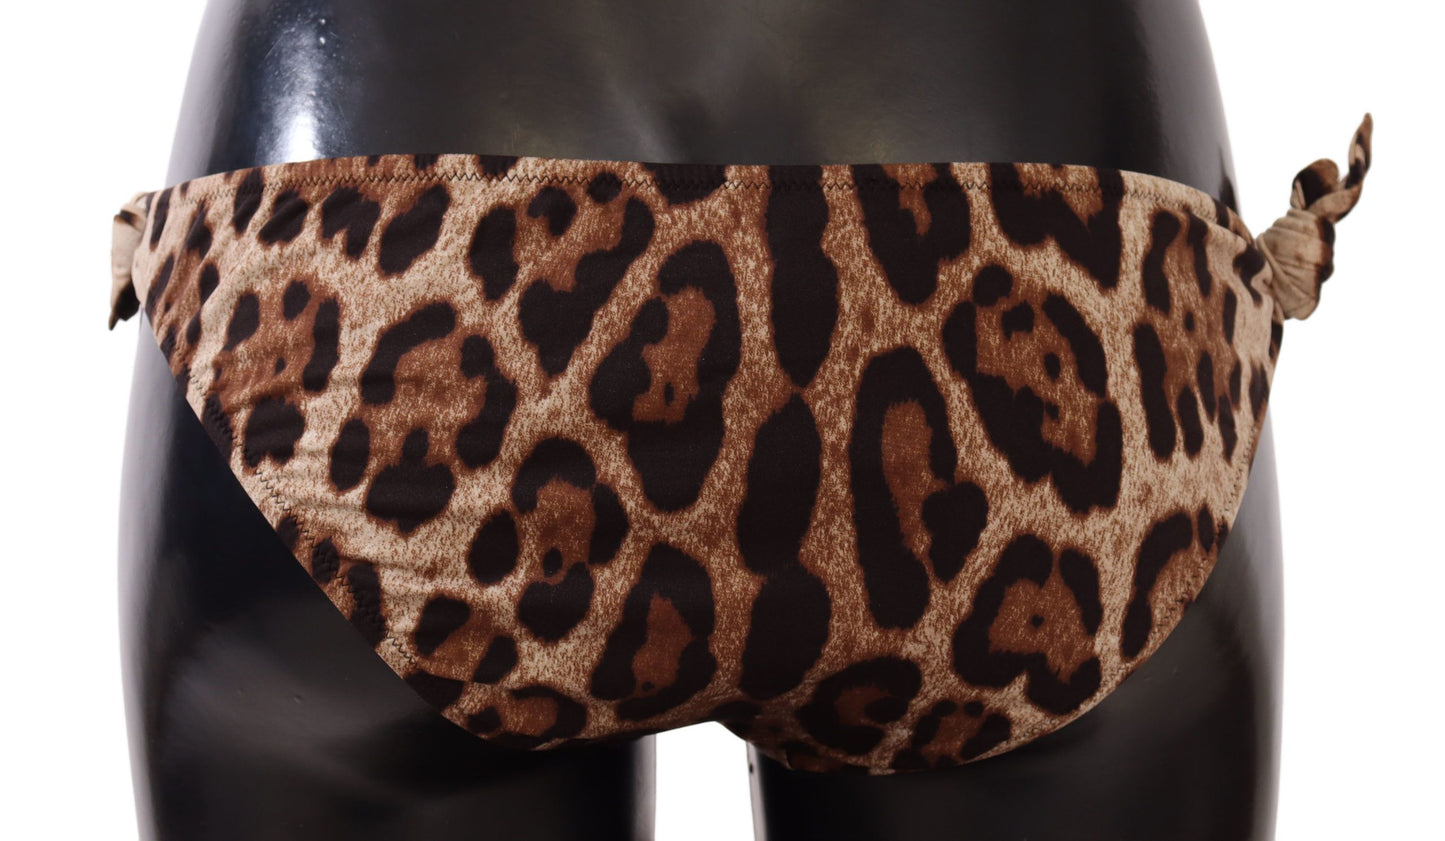 Elegant Leopard Print Bikini Bottom